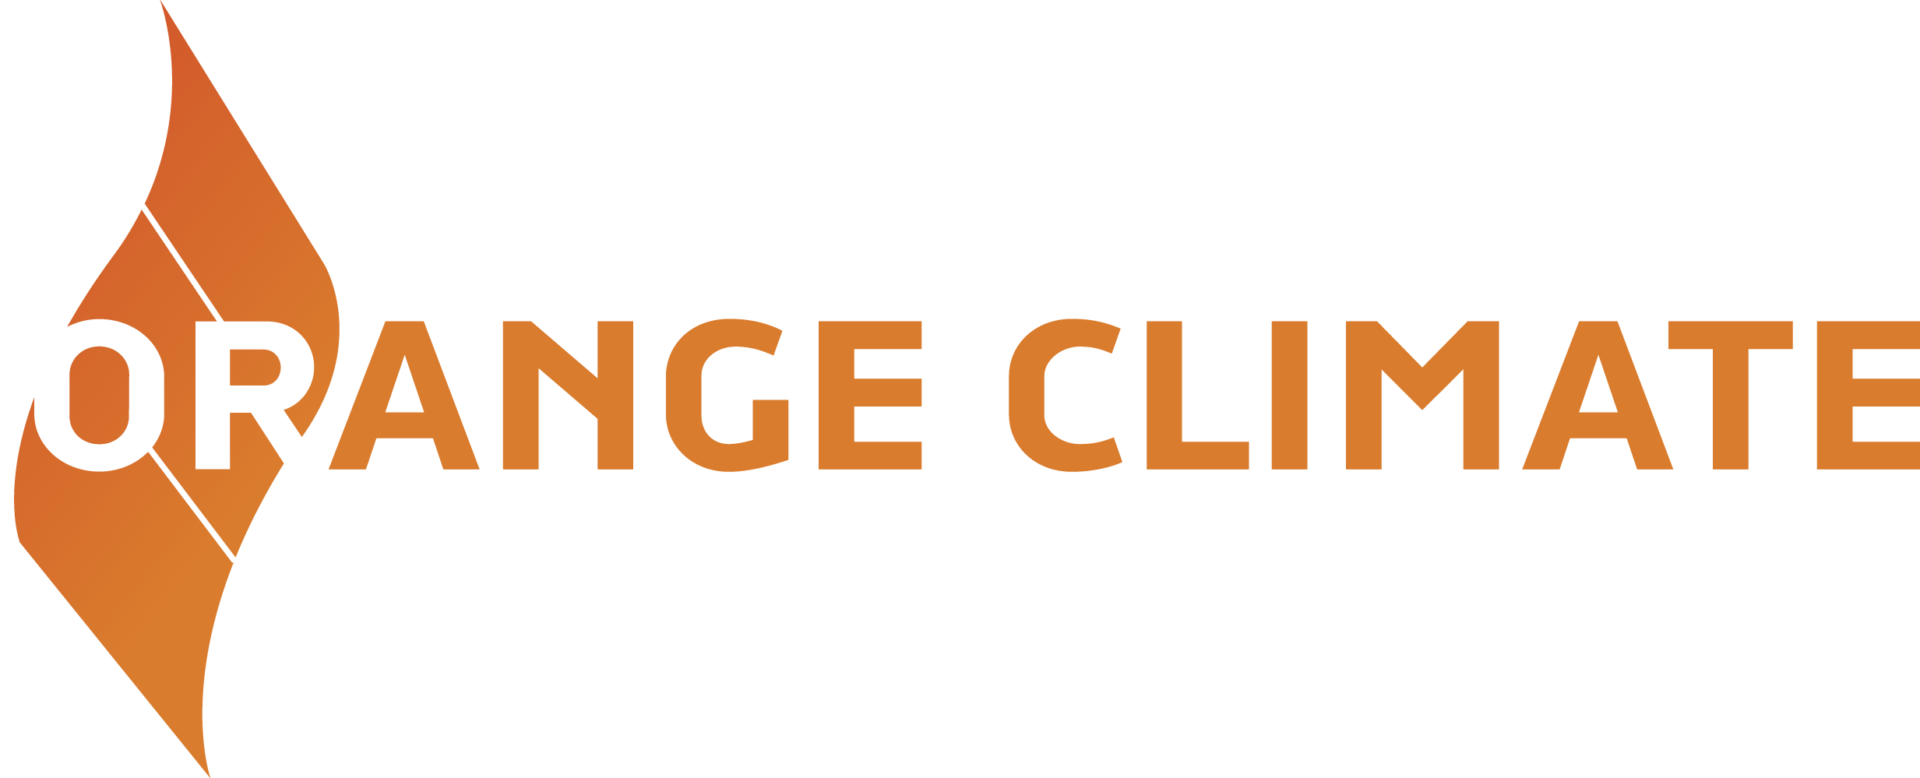 Orange-climate